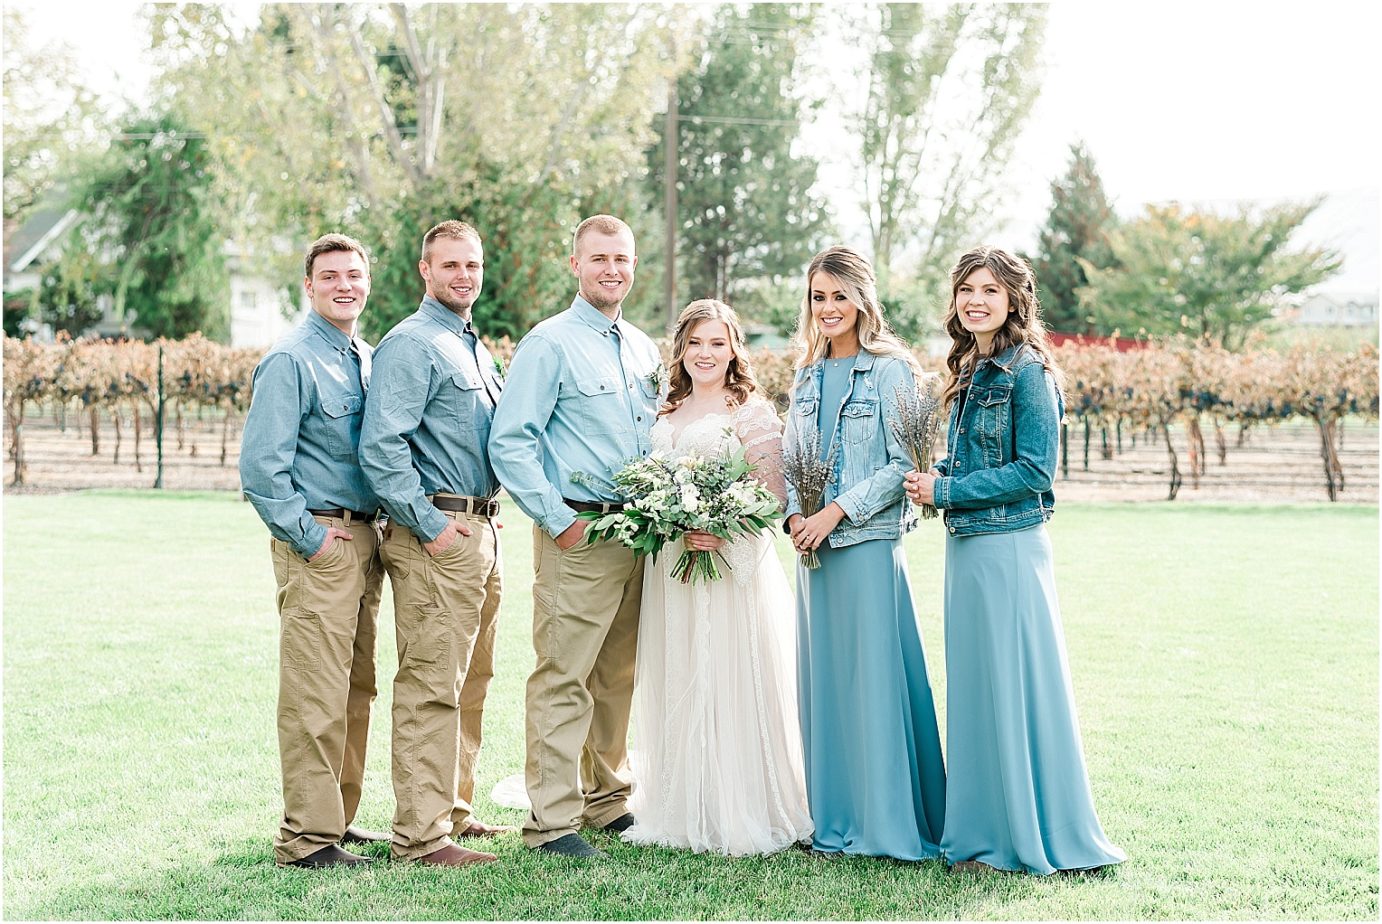 Sugar pine barn wedding tucannon cellars Brandon and Chloe bridal party in dusty blue dresses and khakis